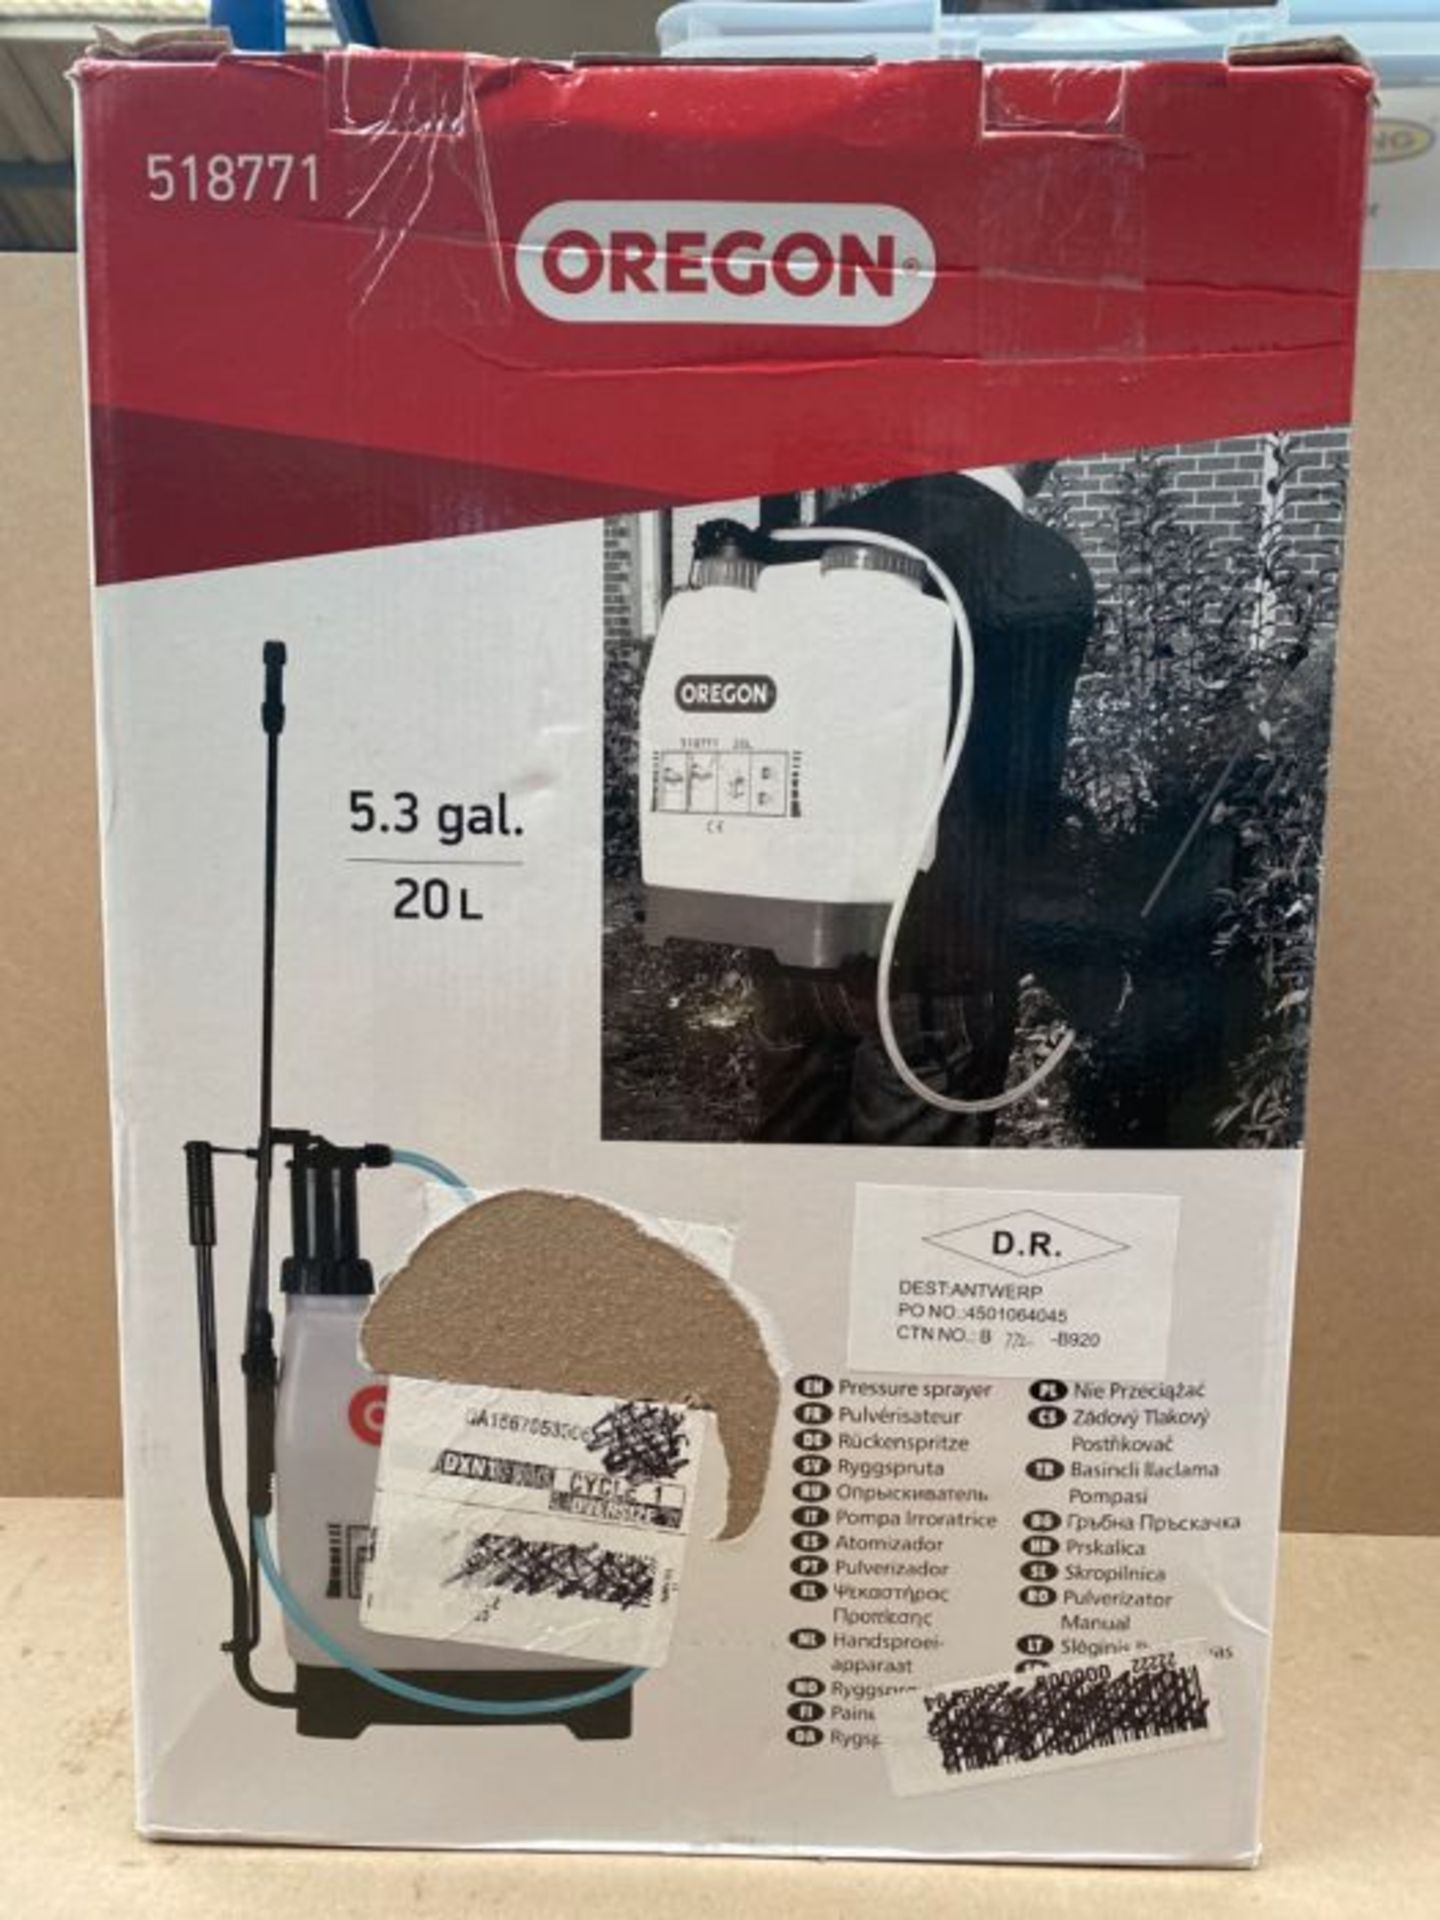 Oregon Backpack Pressure Garden Chemical / Weed Killer Sprayer with Lance and 2 Adjust - Image 2 of 3